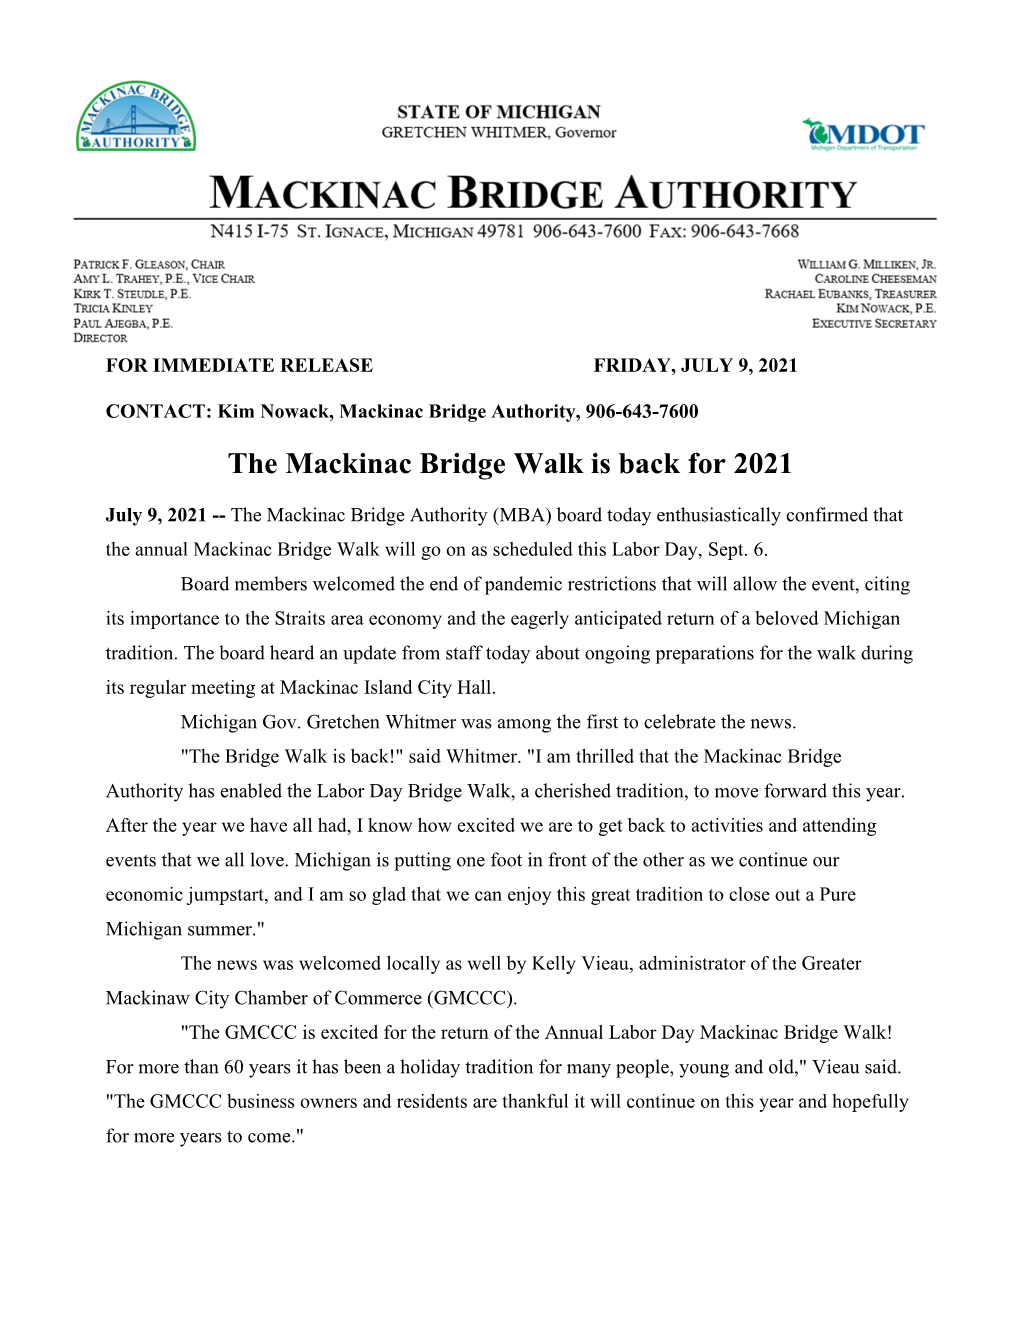 The Mackinac Bridge Walk Is Back for 2021